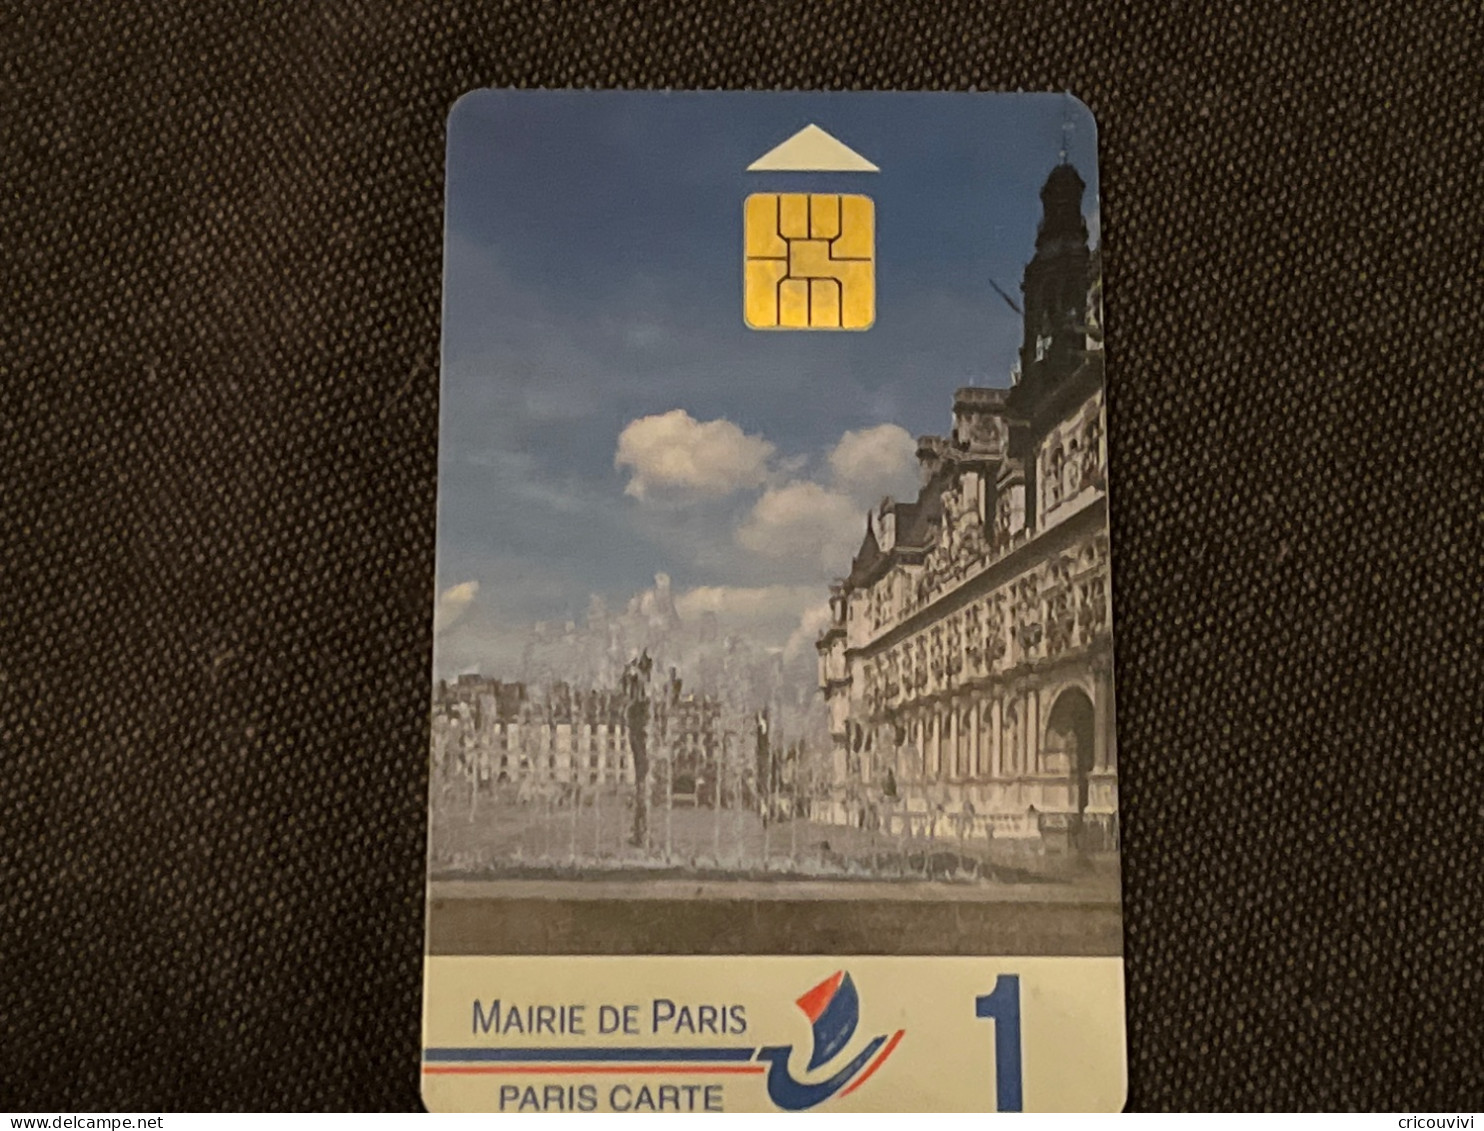 Paris Carte 12 - Parkkarten